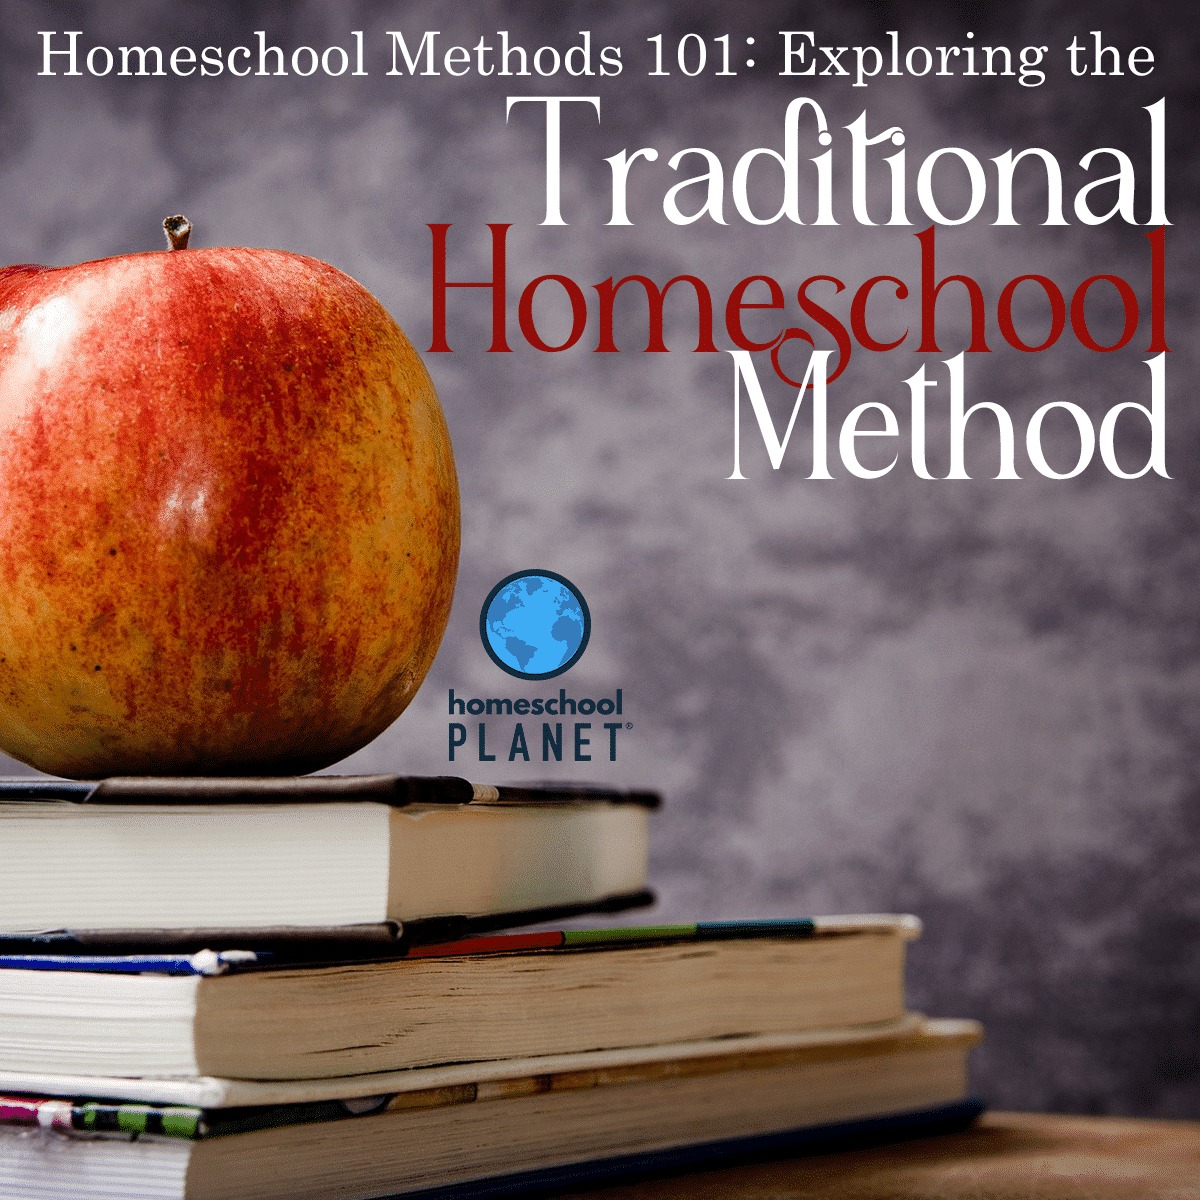 Homeschool Methods 101: Exploring the Traditional Homeschool Method